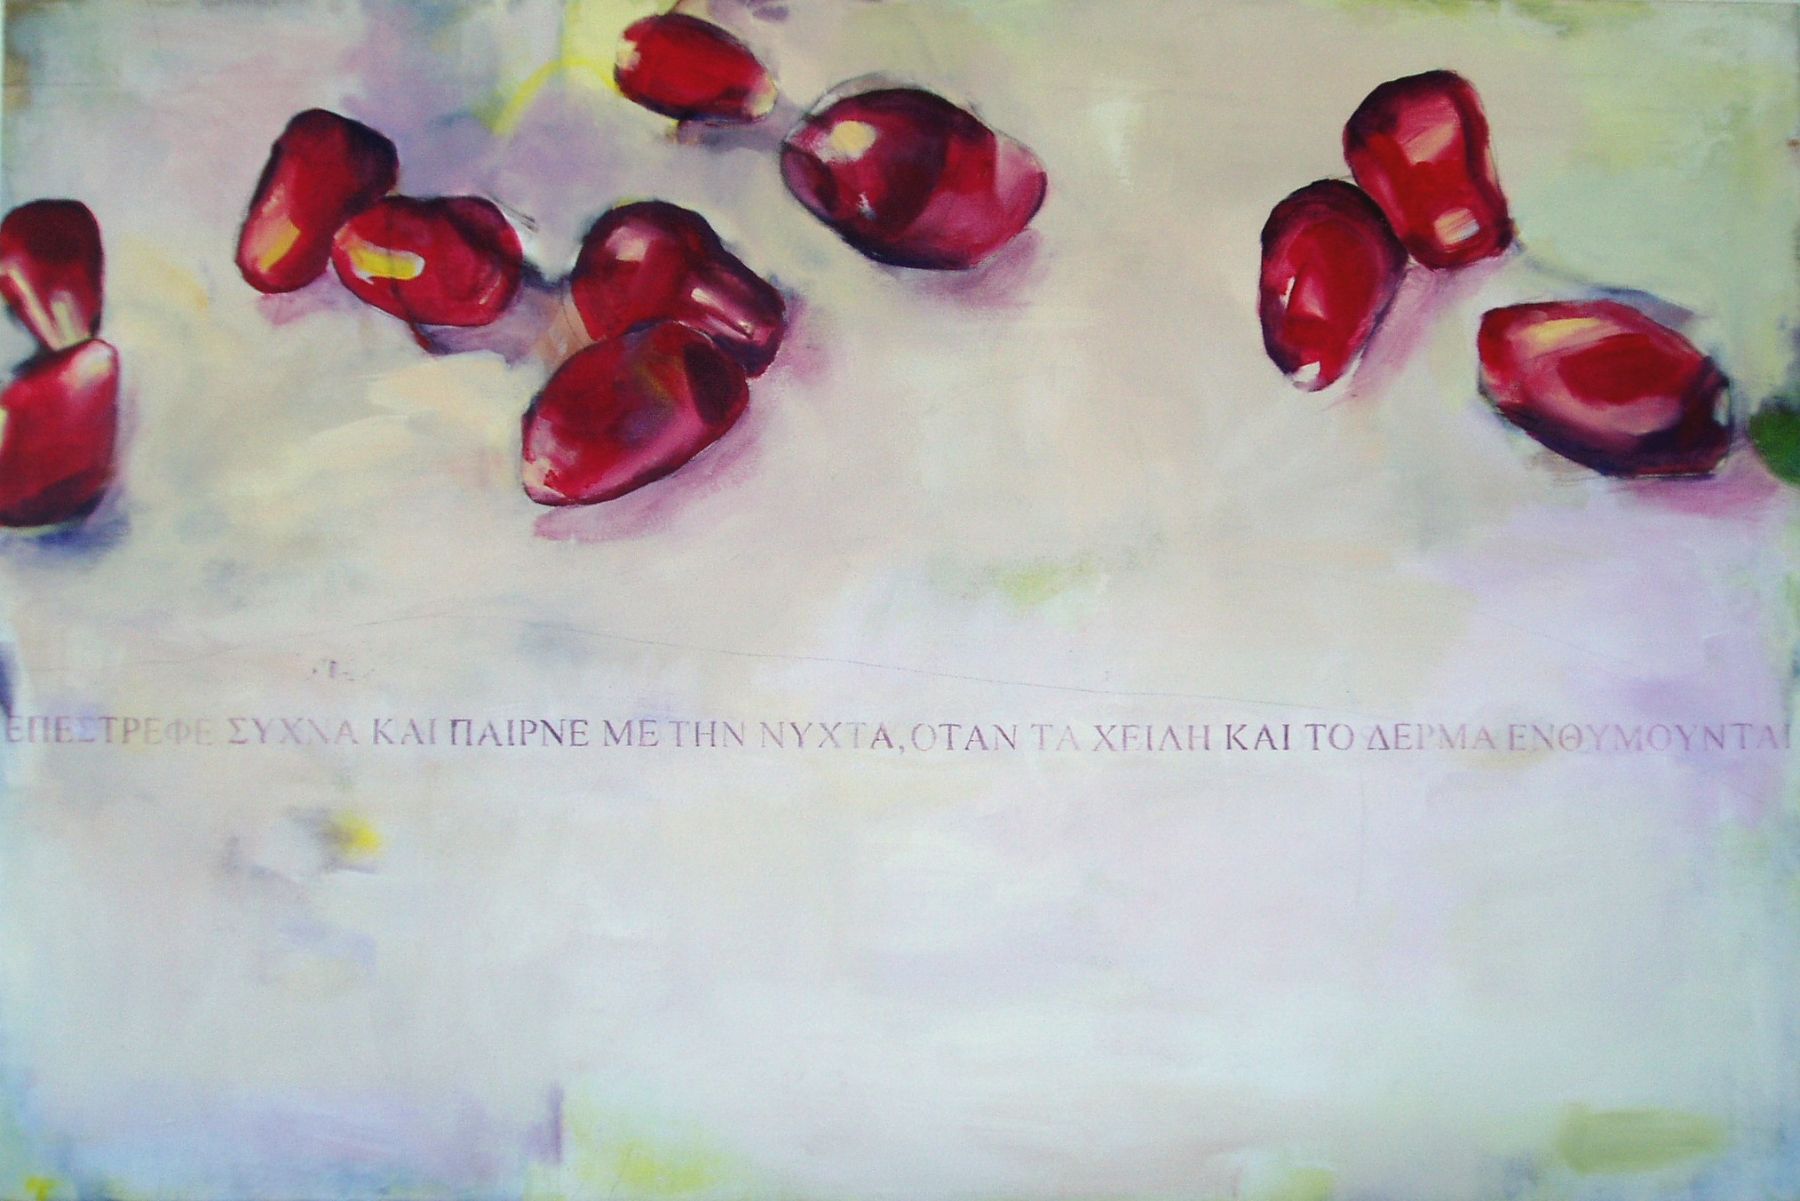 Seeds - painting, acrylic on canvas by artist Neva Bergemann